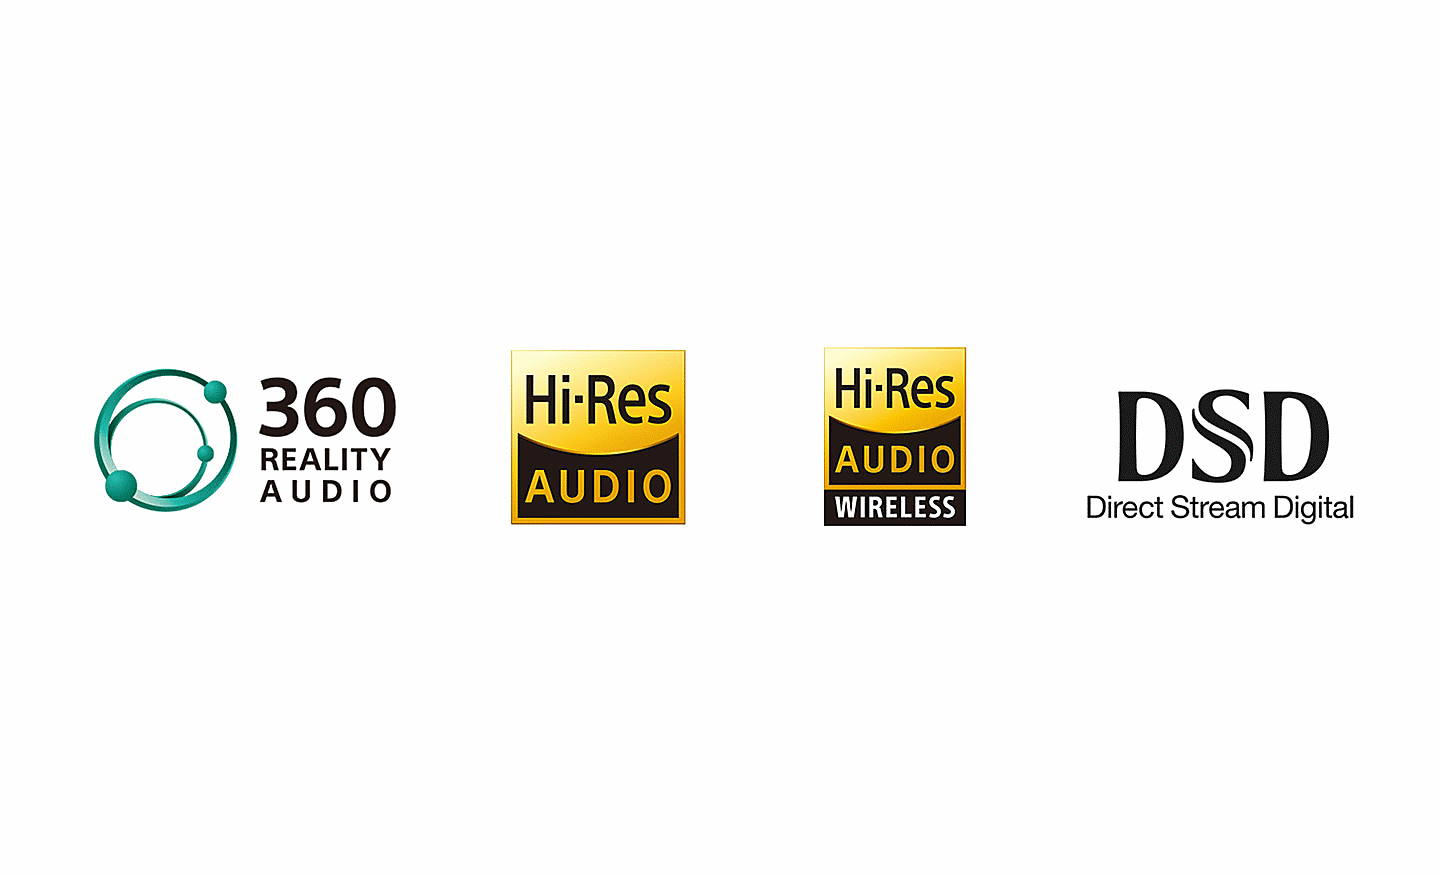 360 Reality Audio logosu, Yüksek Çözünürlüklü Ses logosu, Yüksek Çözünürlüklü Ses Wireless logosu, DSD Direct Stream Digital logosu